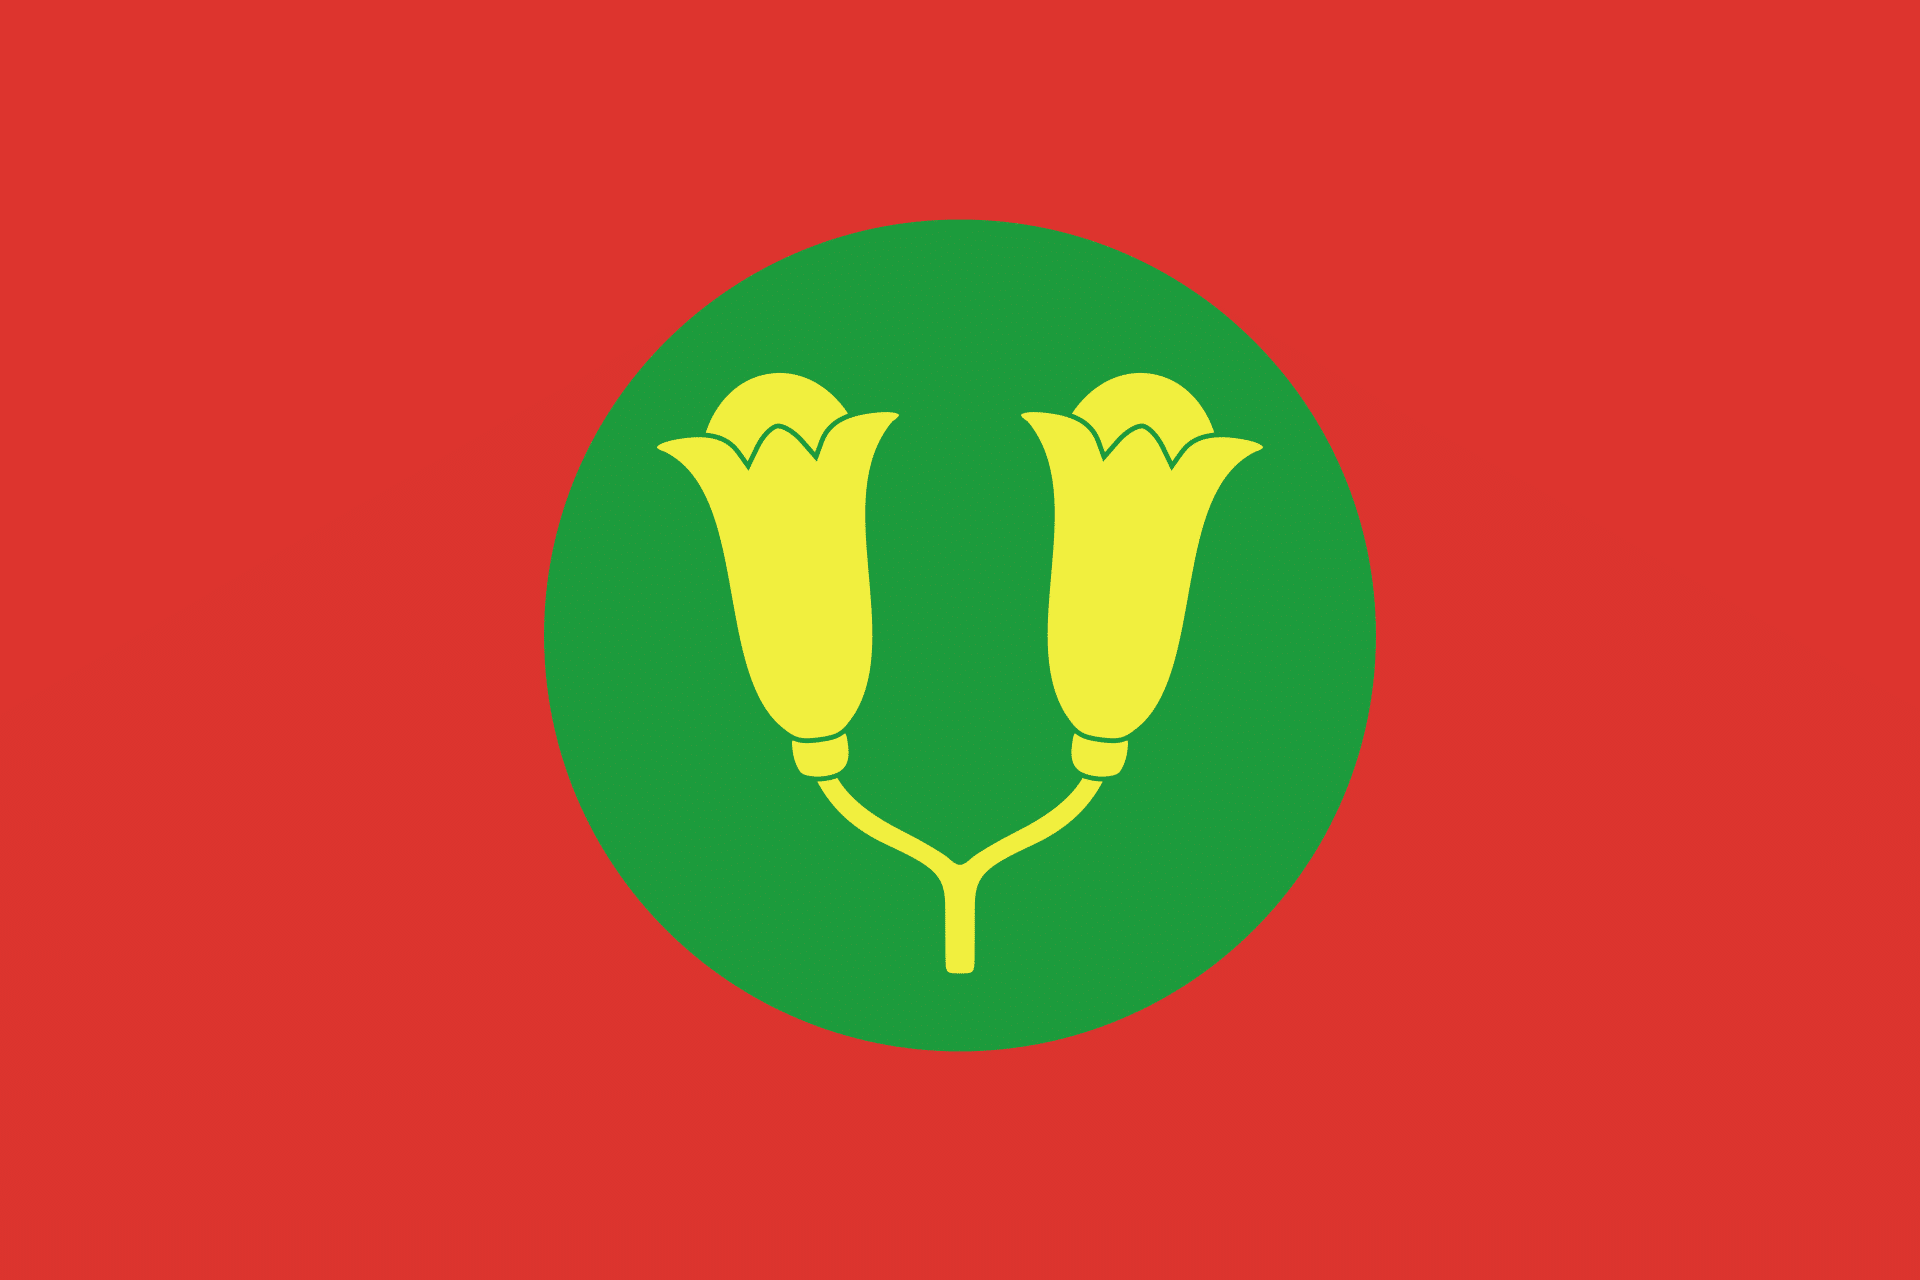 Zanzibar flag - 10 December 1963 to 12 January 1964